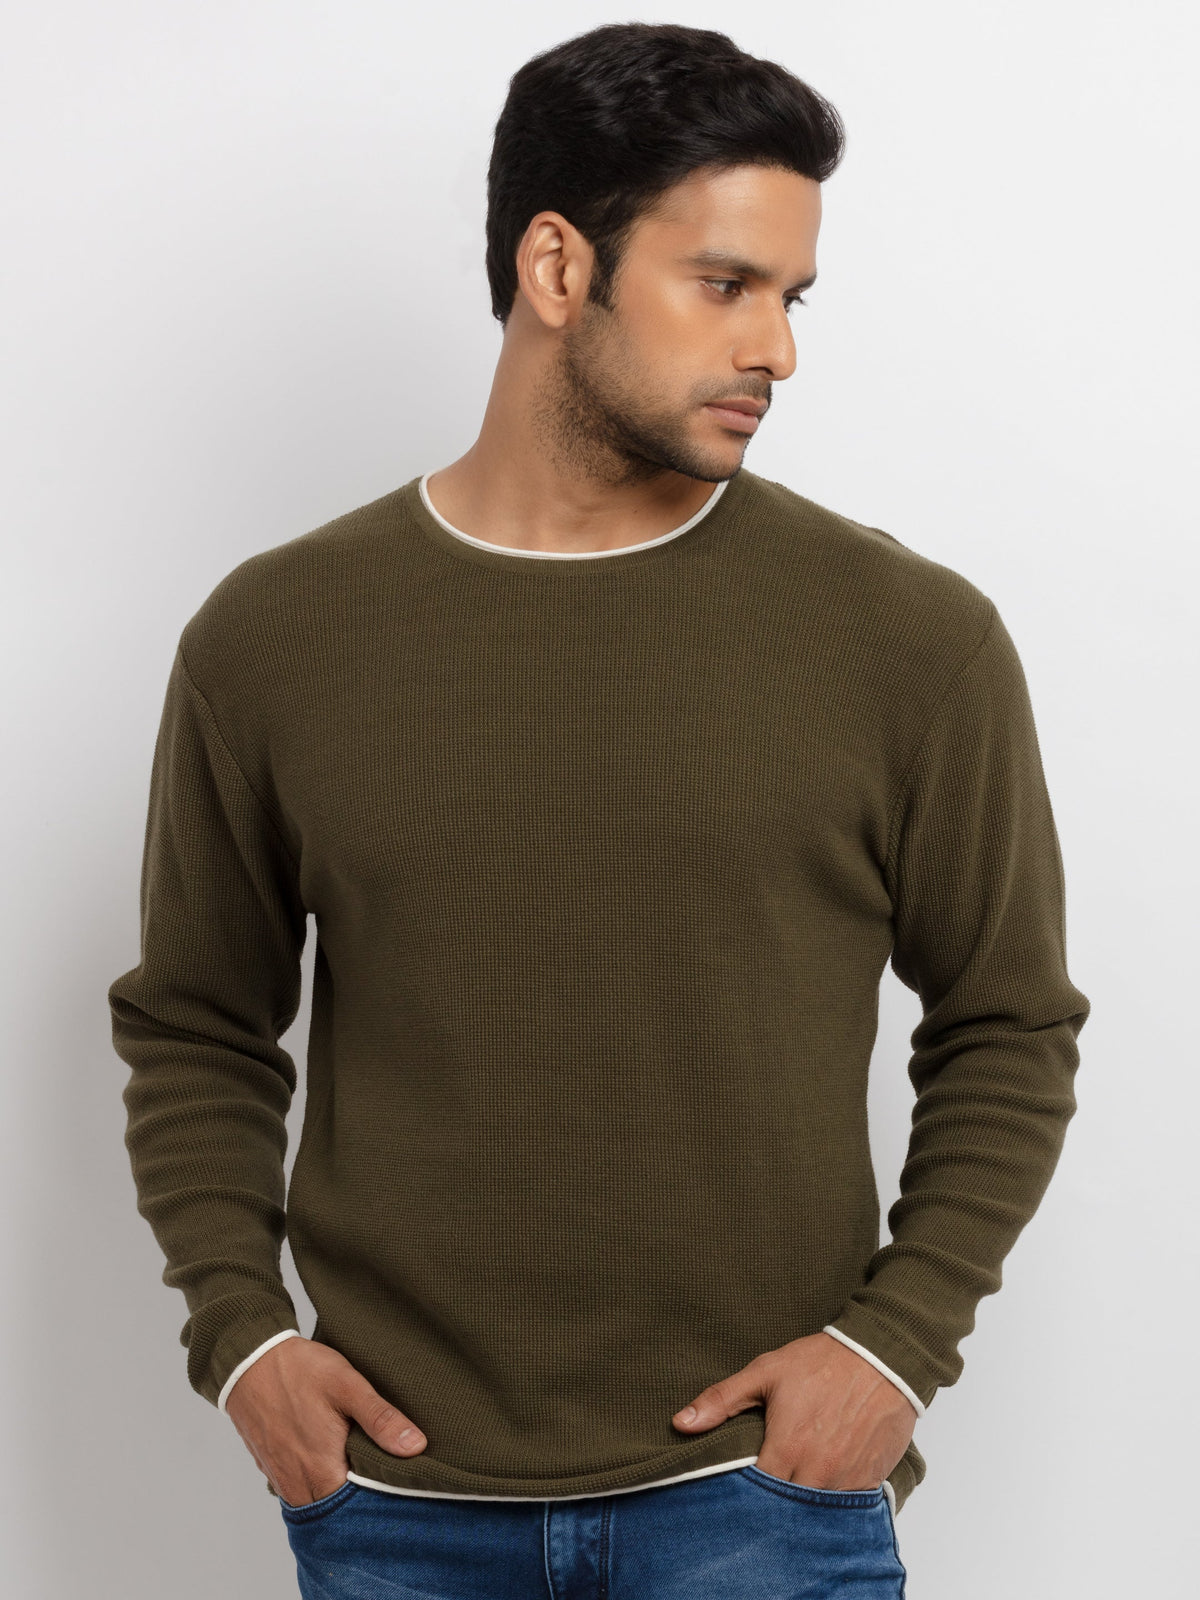 Status Quo |Men's  Sweaters - S, M, L, XL, XXL